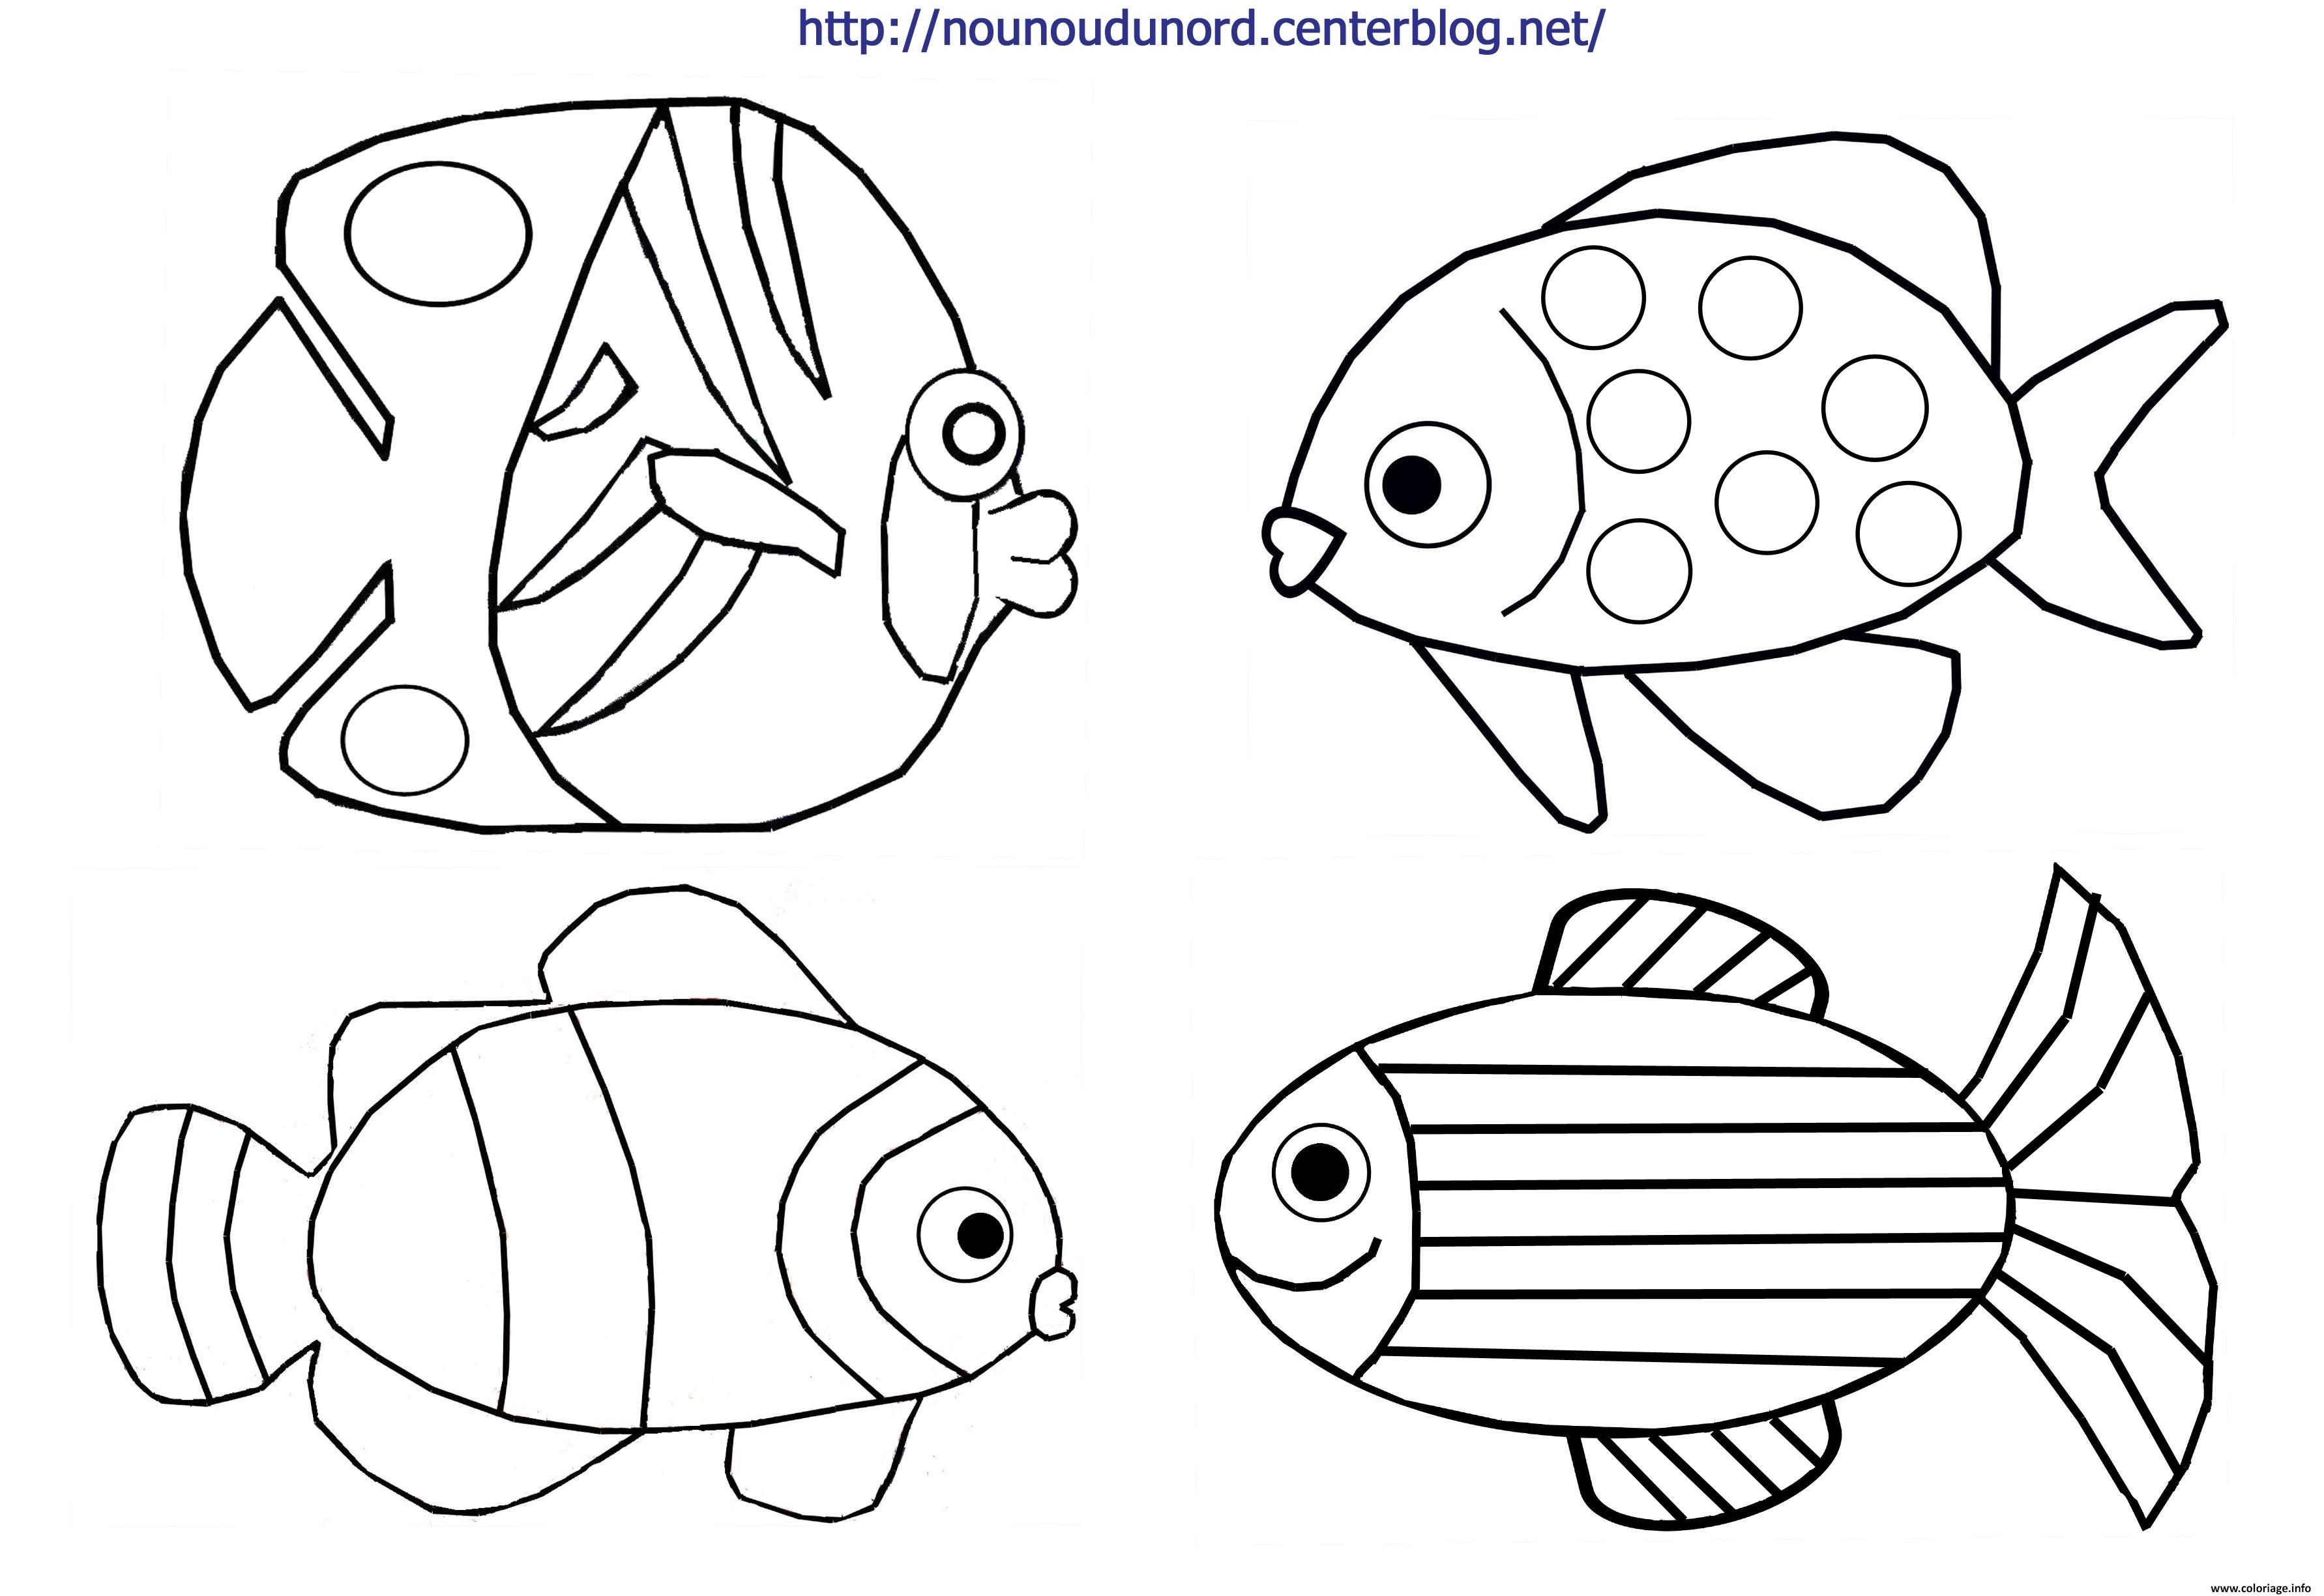 Dessin poisson davril dessin Coloriage Gratuit à Imprimer